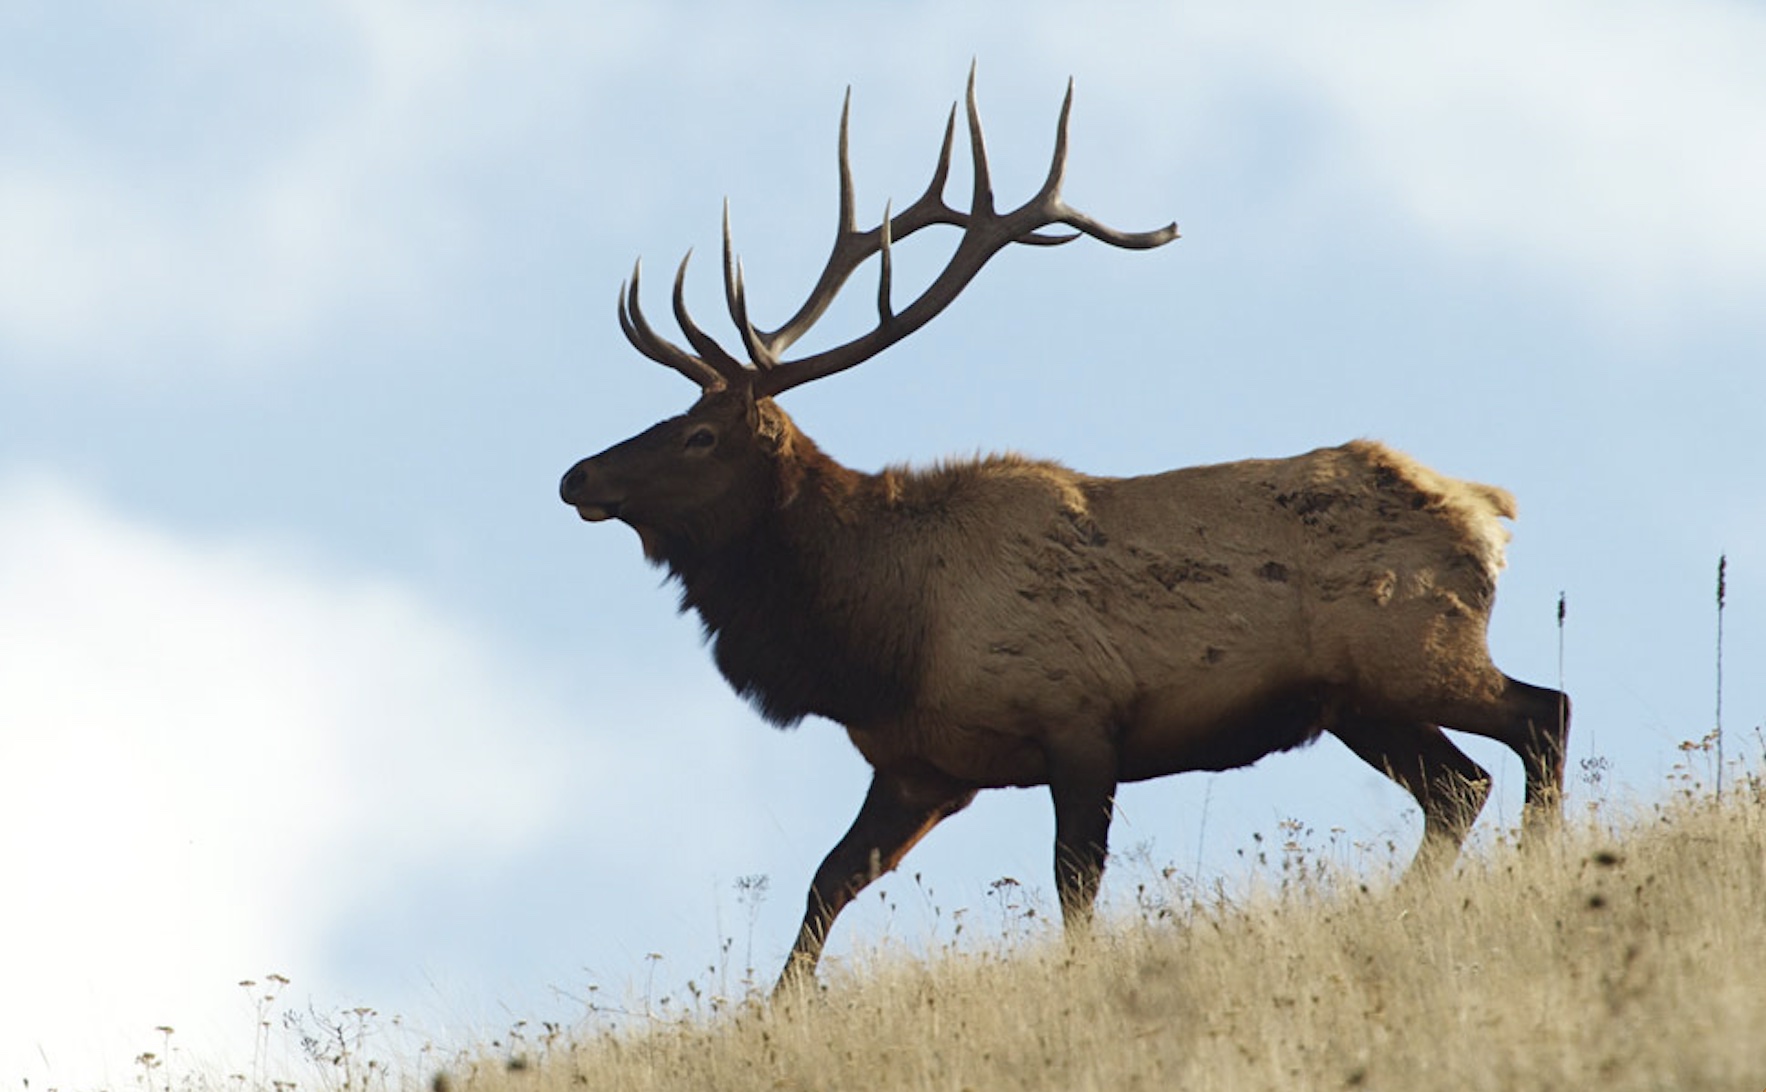 How to Score a Bull Elk